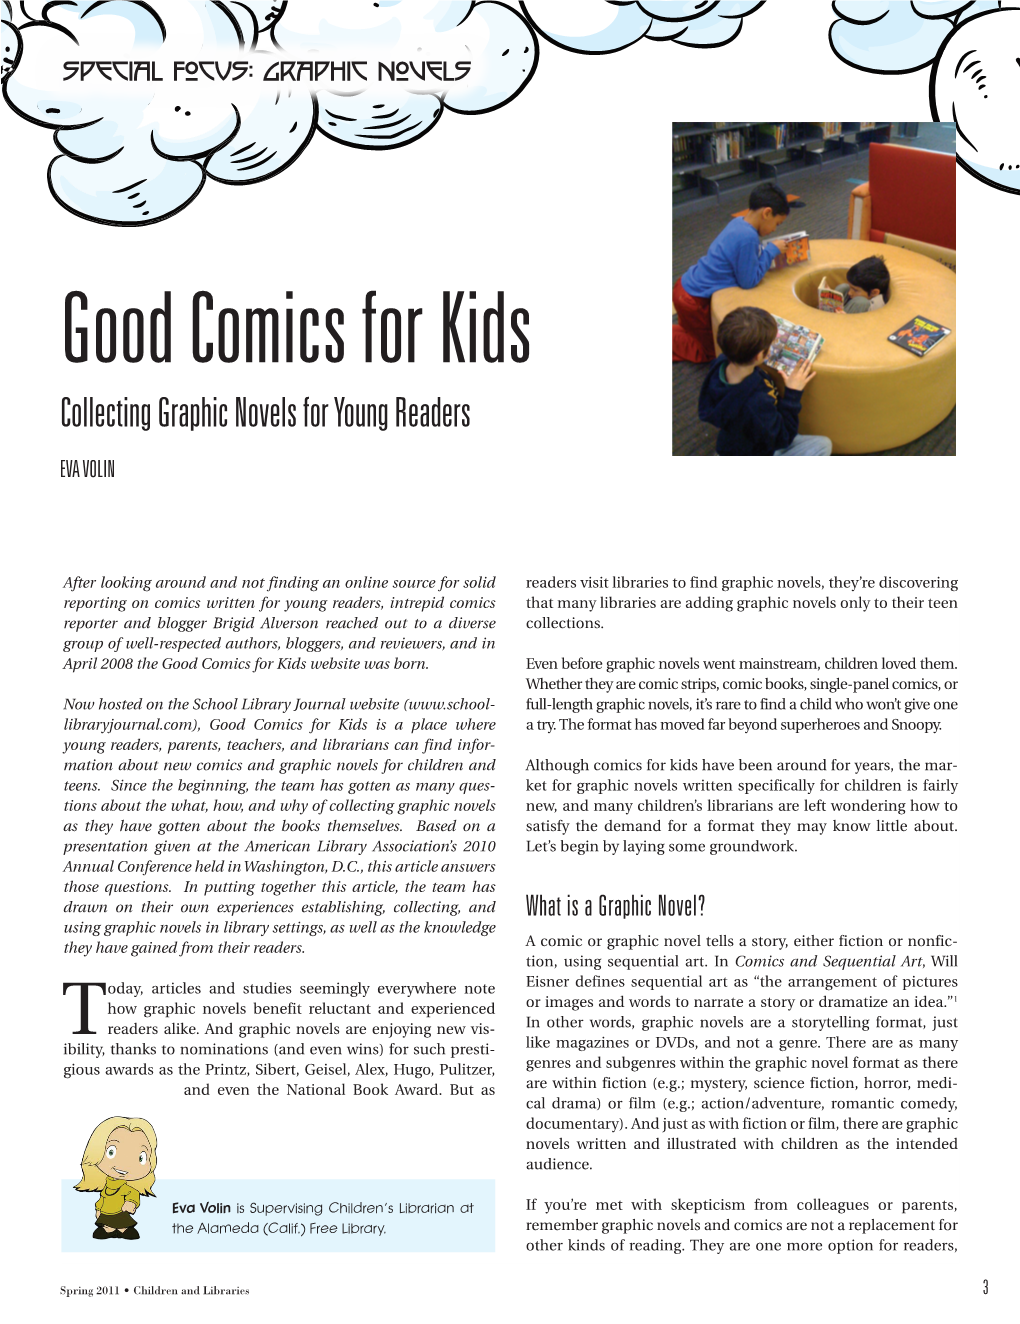 “Good Comics for Kids: Collecting